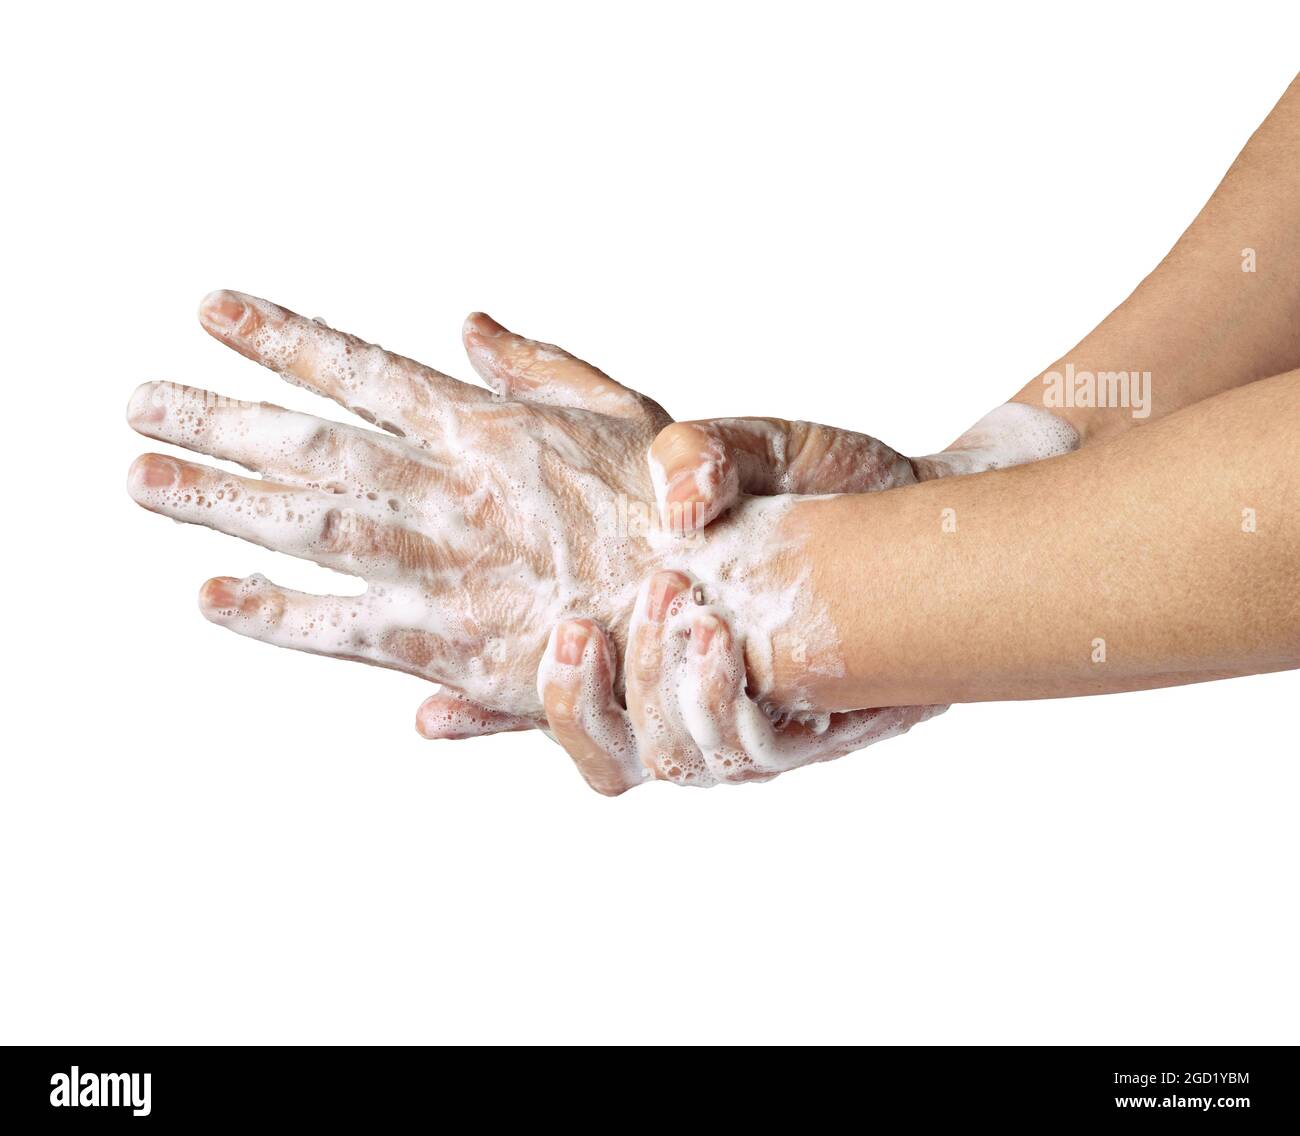 hand washing soap hygiene clean virus edpidemic disease corona flue bathroom water Stock Photo